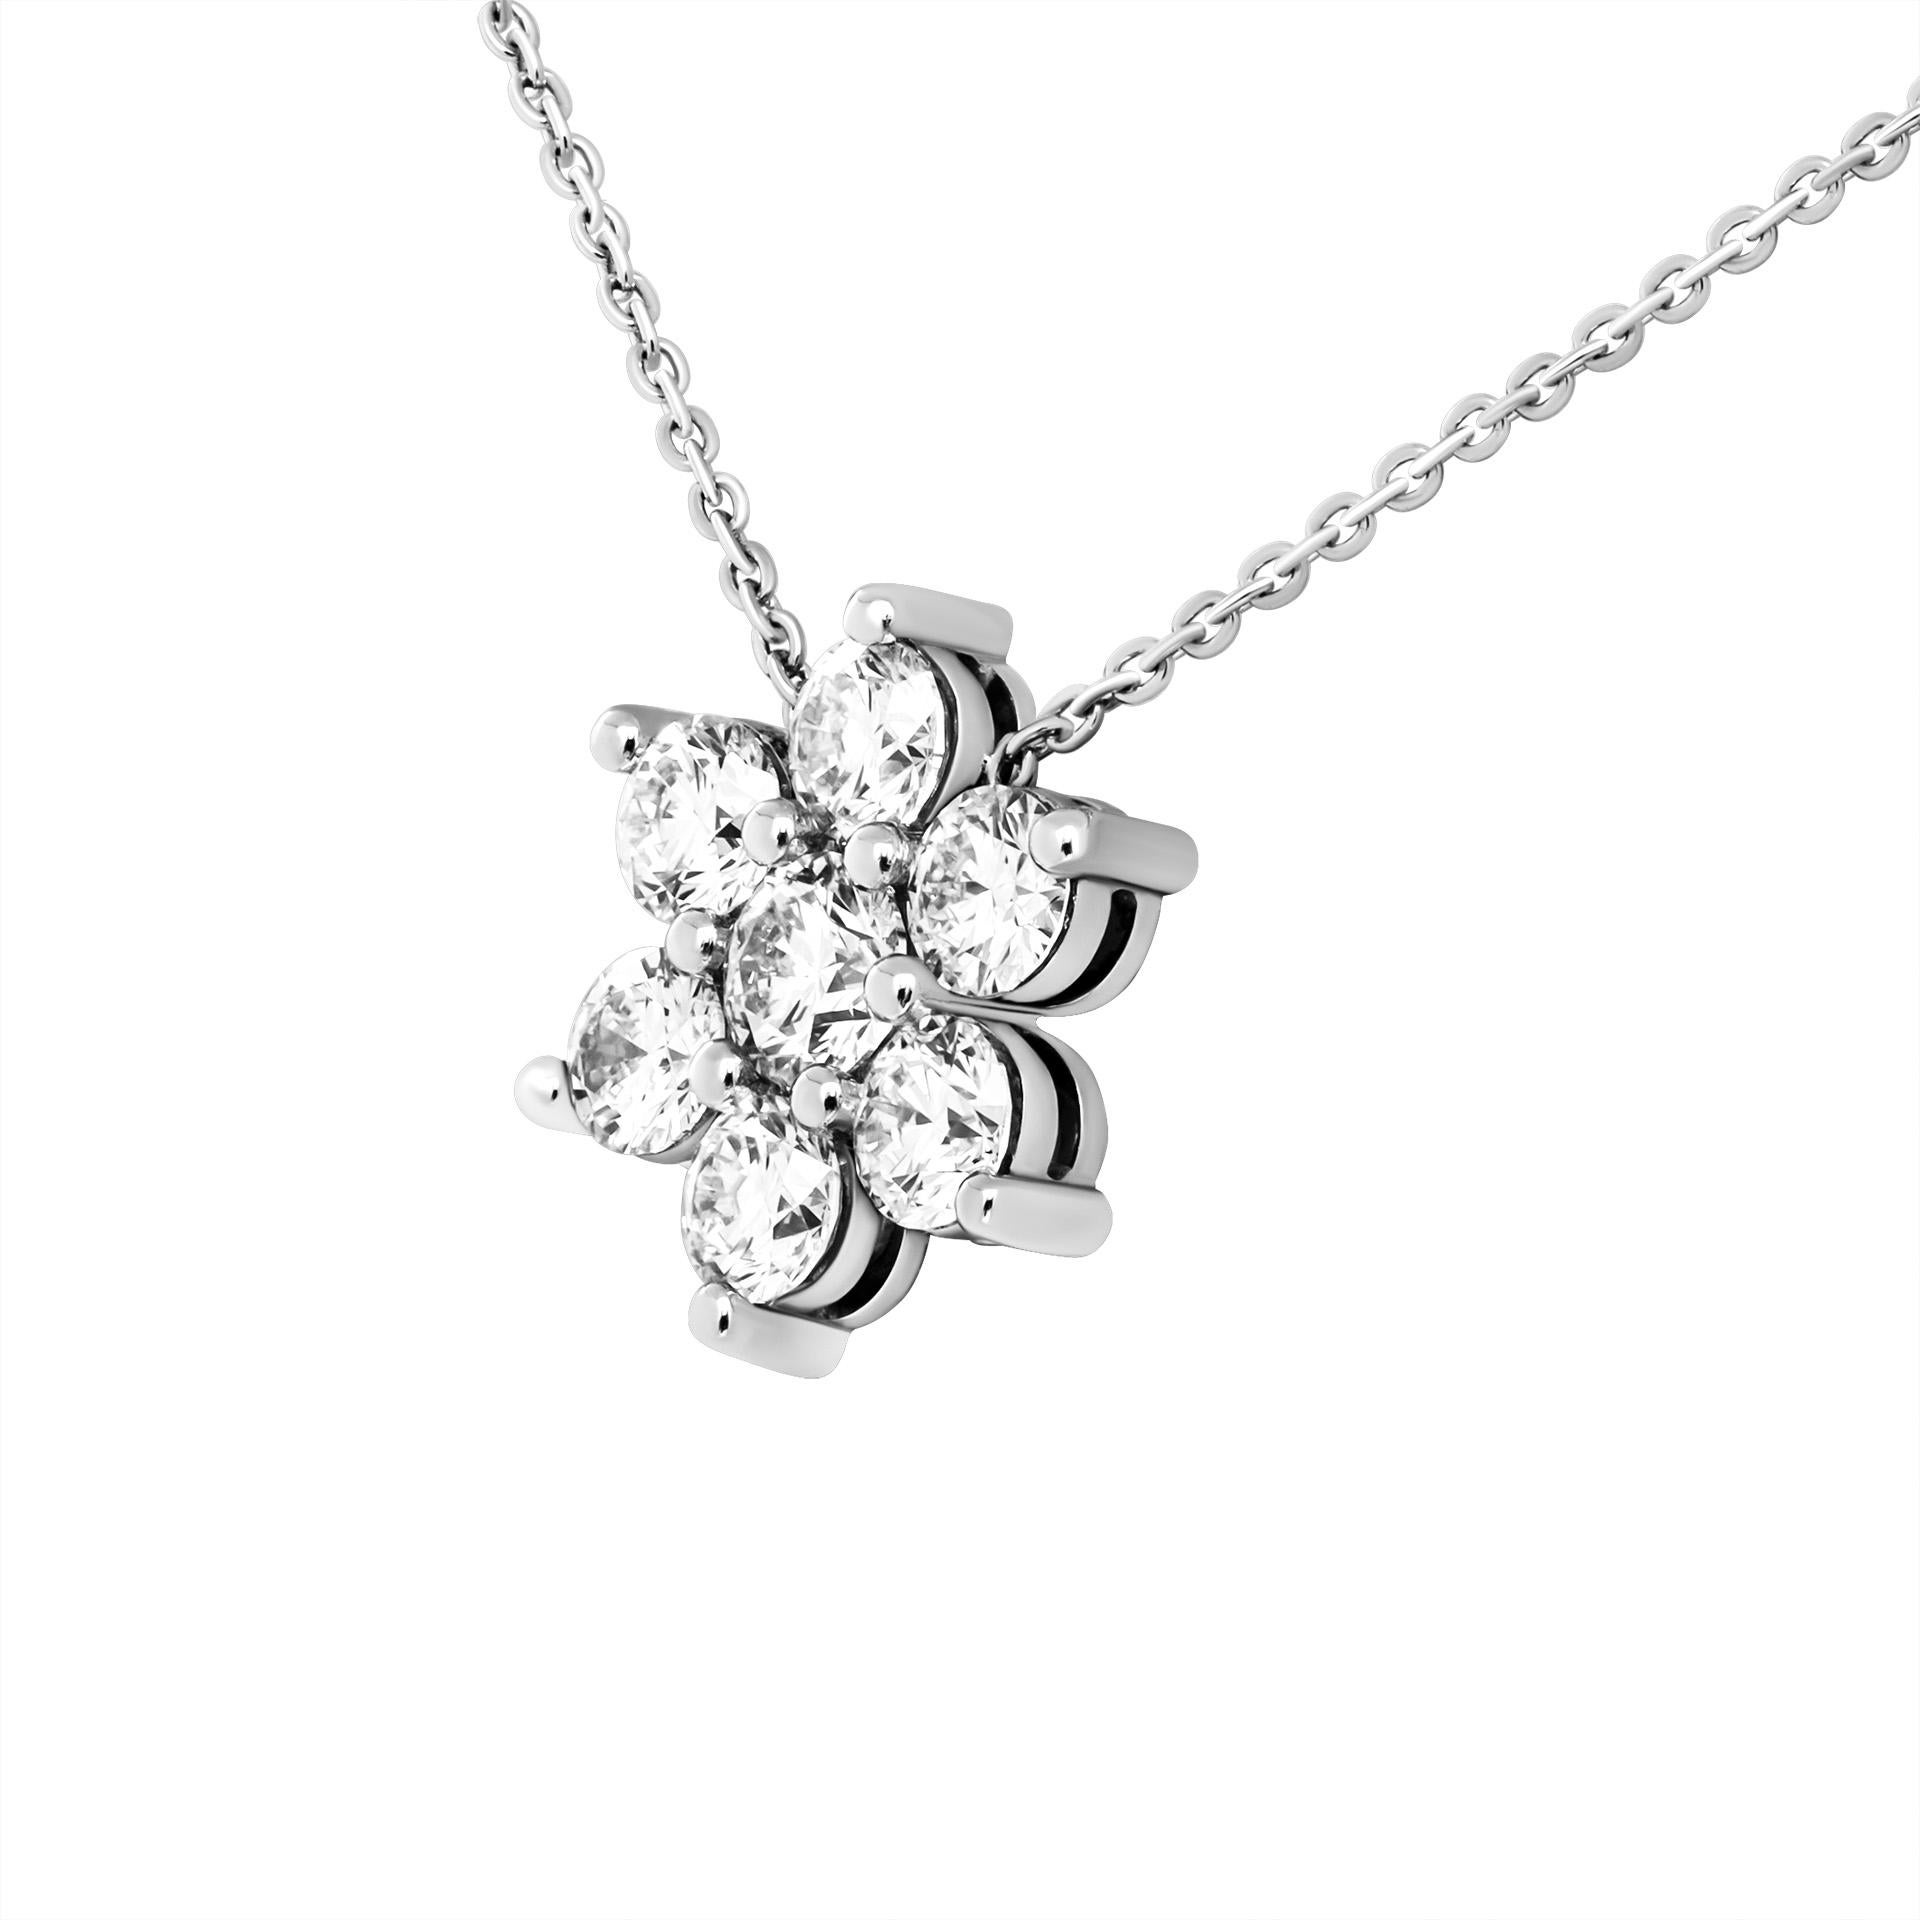 Floral Cluster Diamond Necklace in Platinum

7 Round Brilliants totaling 1ct F/G Color & VS clarity
Platinum chain 16